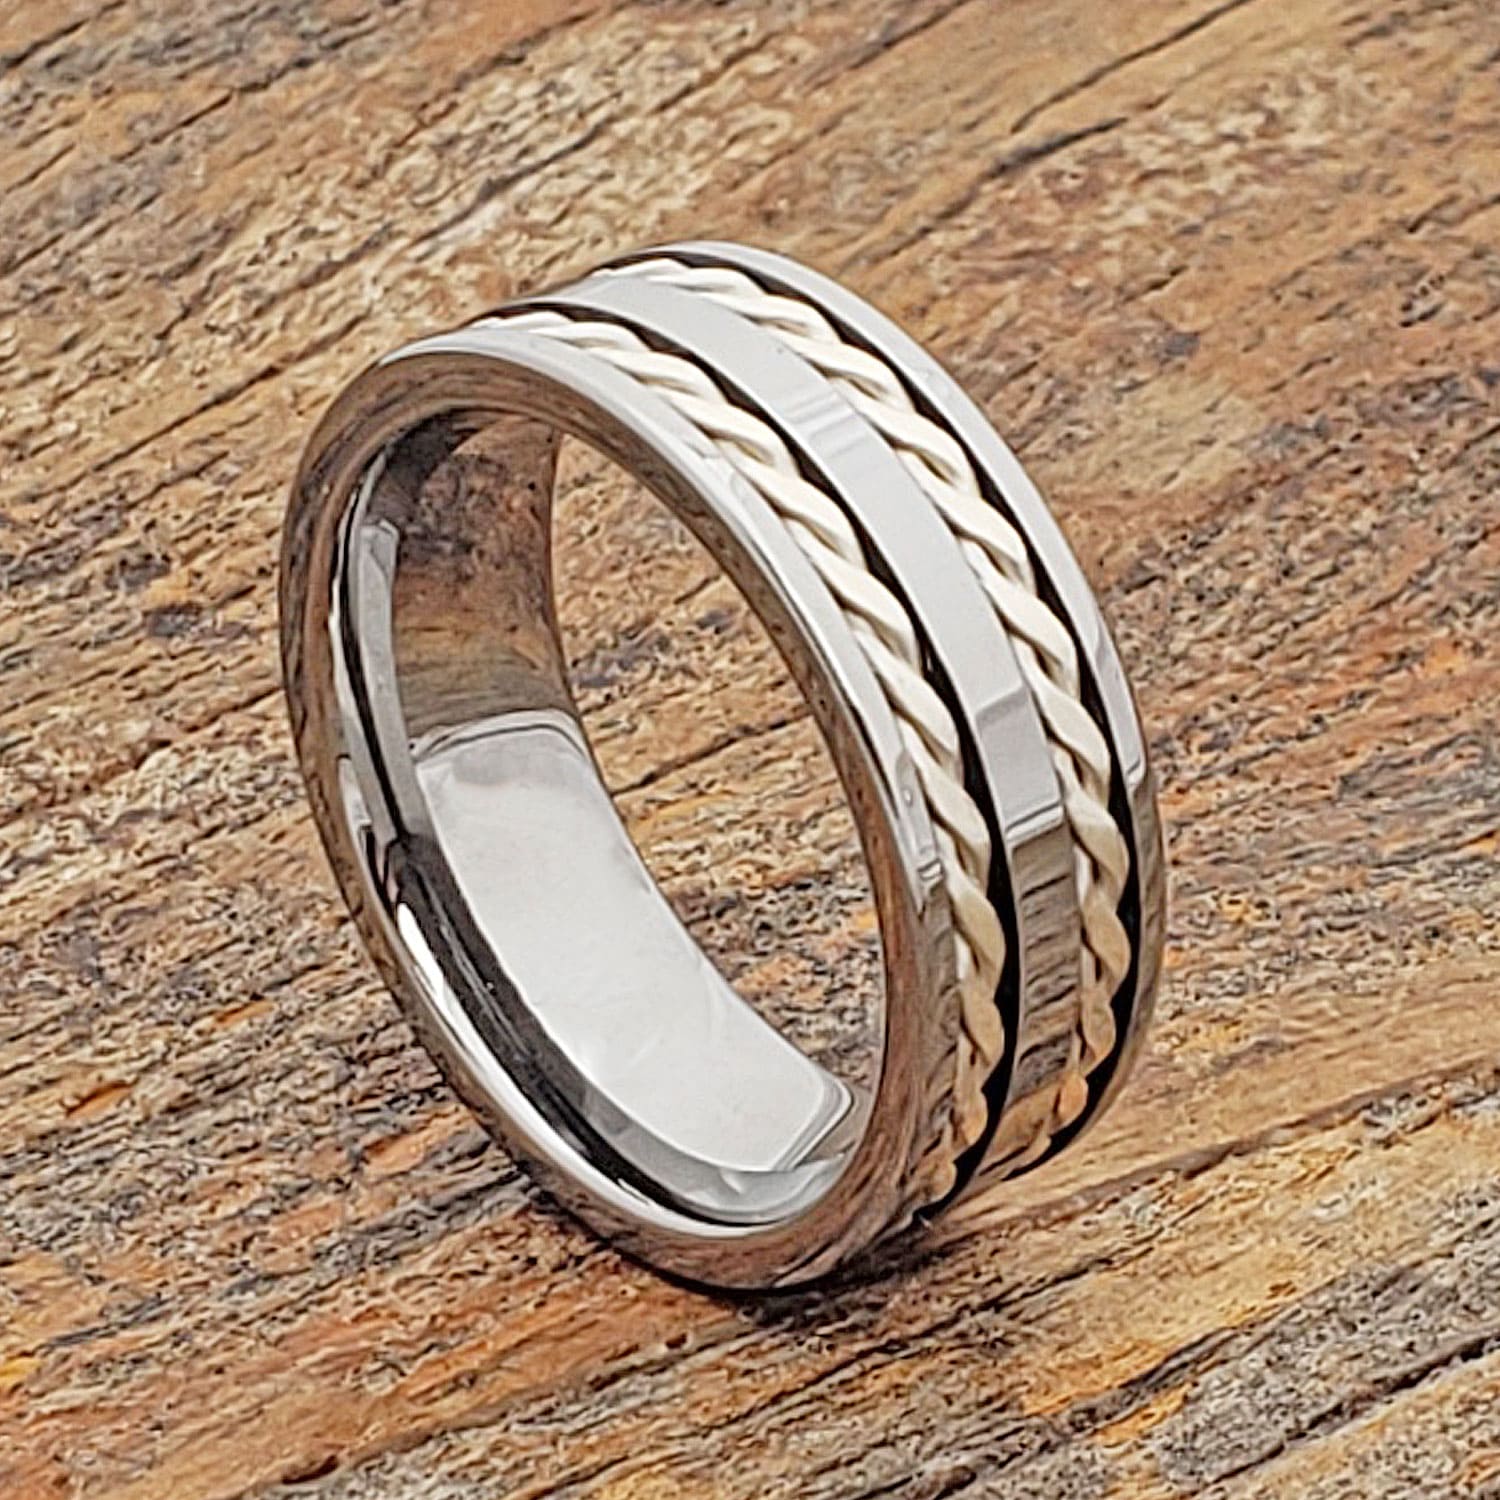 Men's Infinity Ring